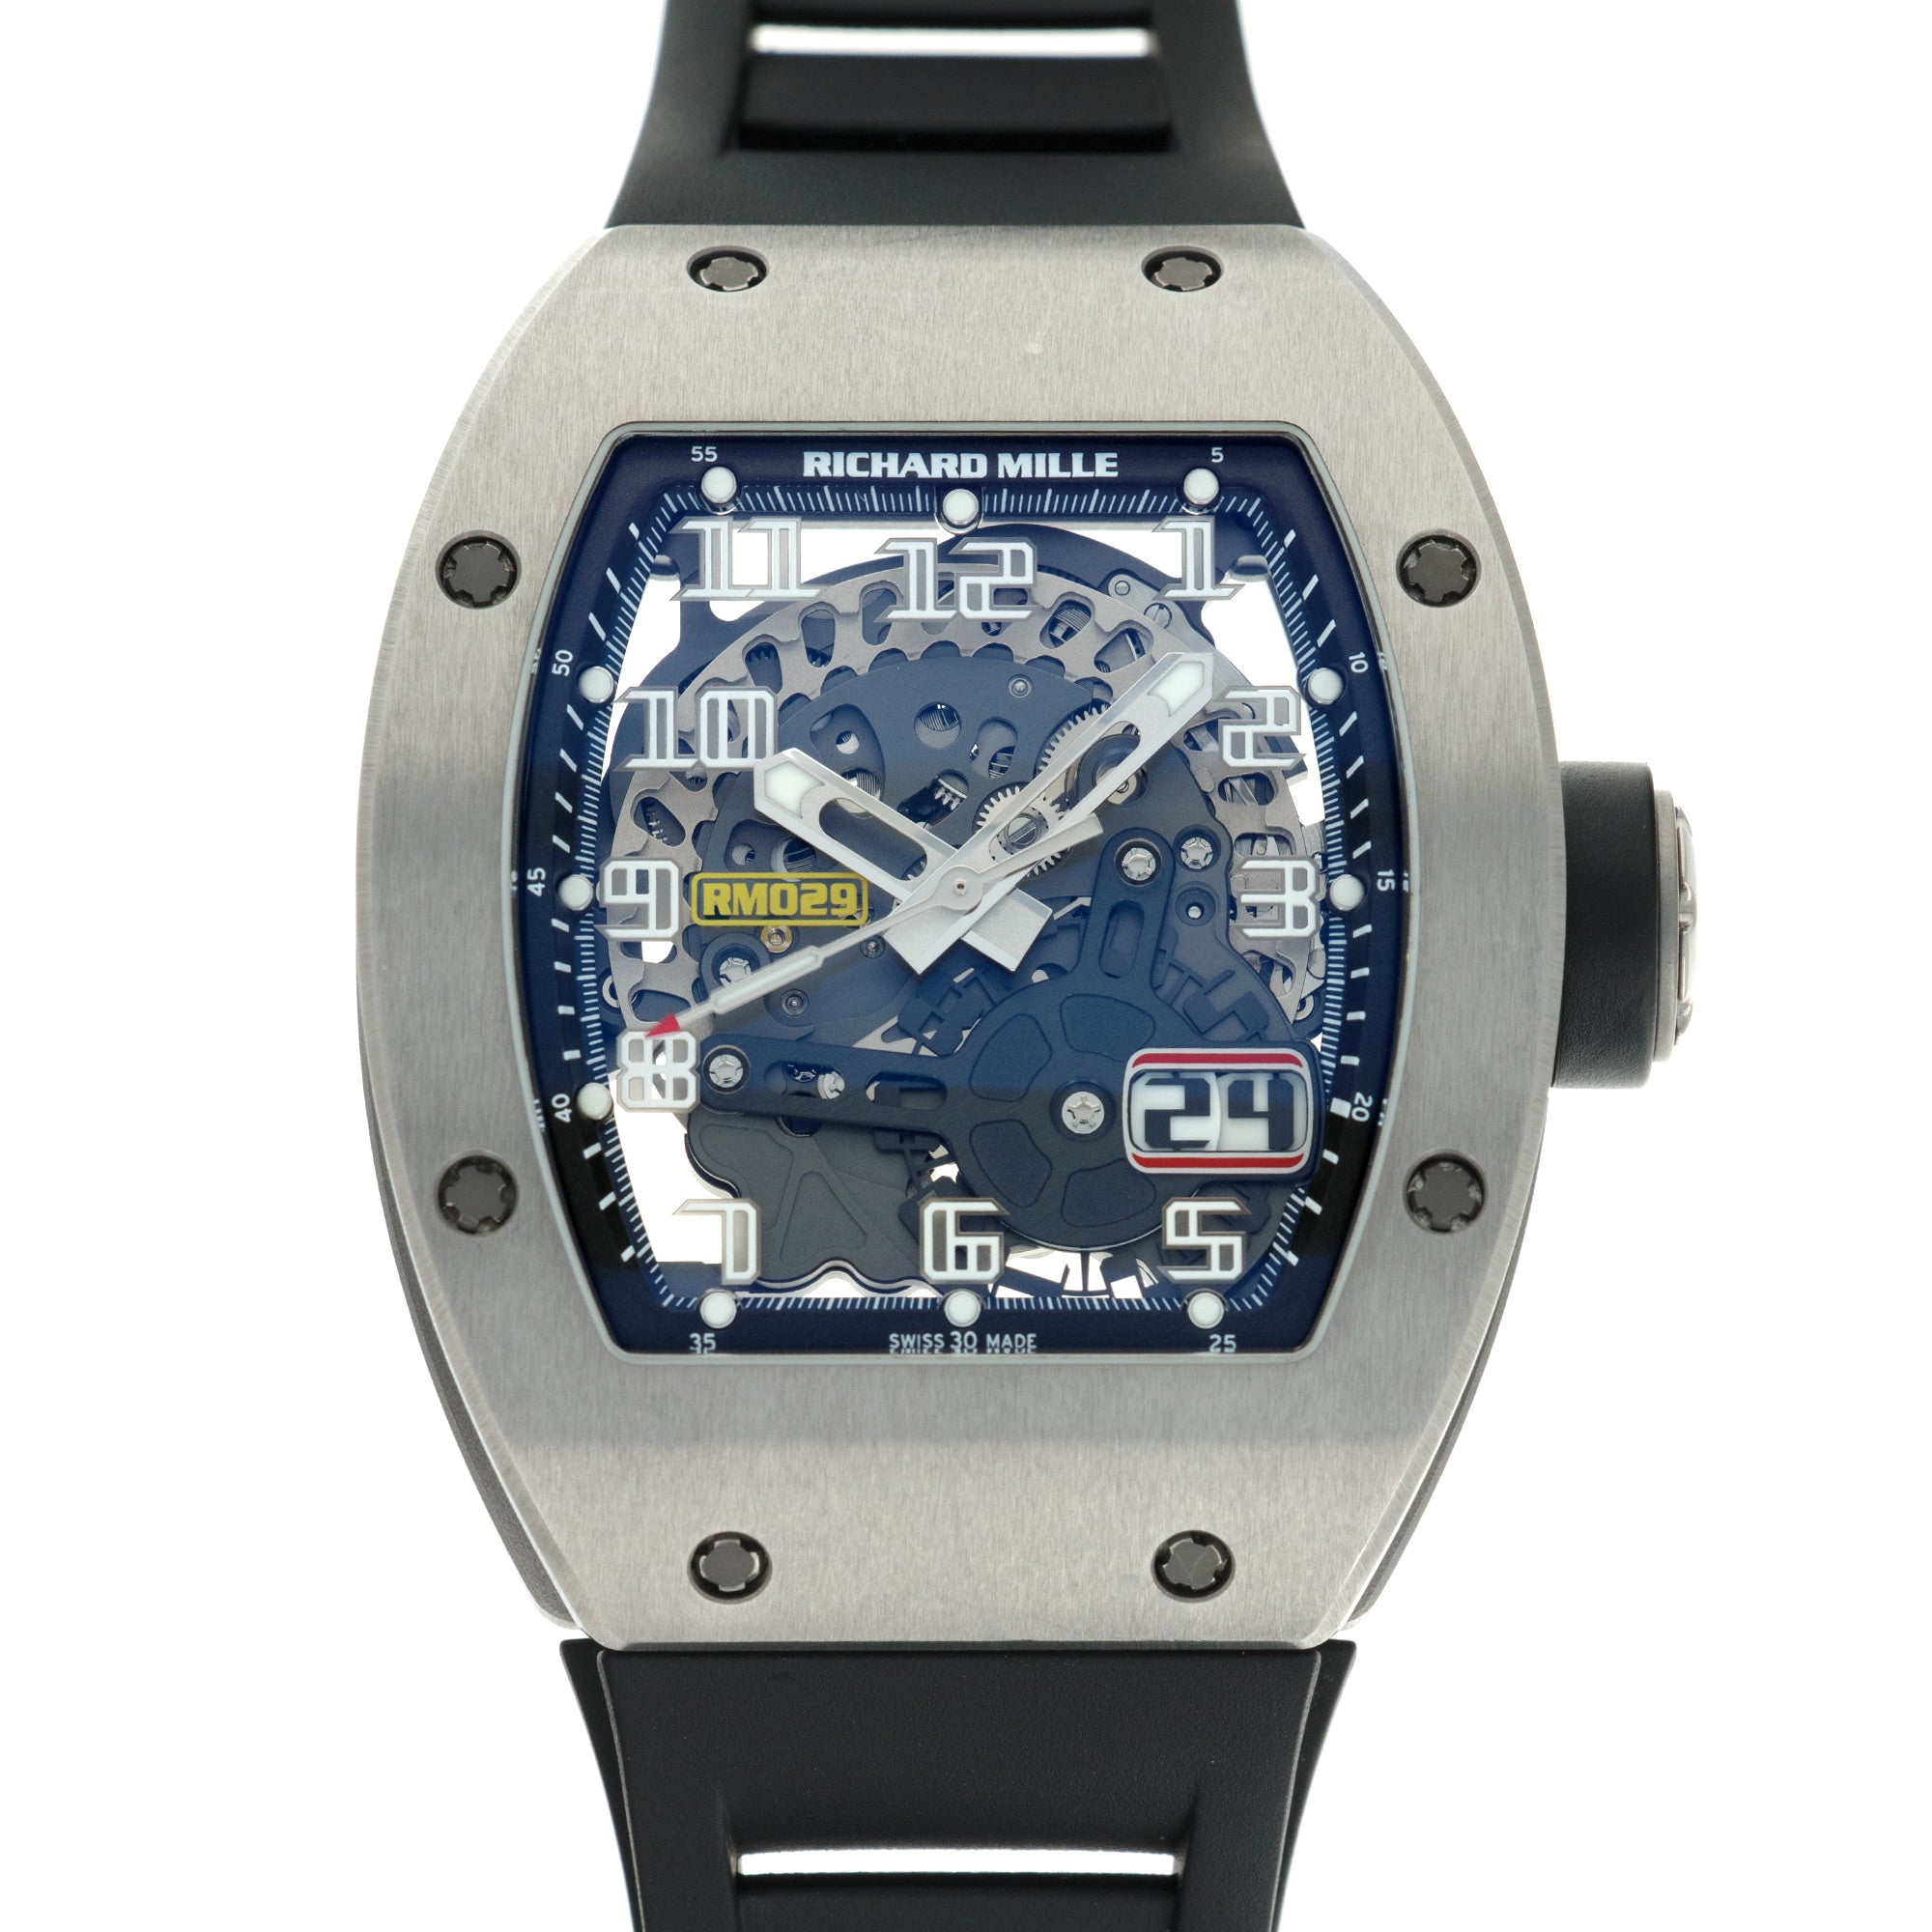 Richard Mille - Richard Mille Titanium Skeleton Watch Ref. RM29 - The Keystone Watches